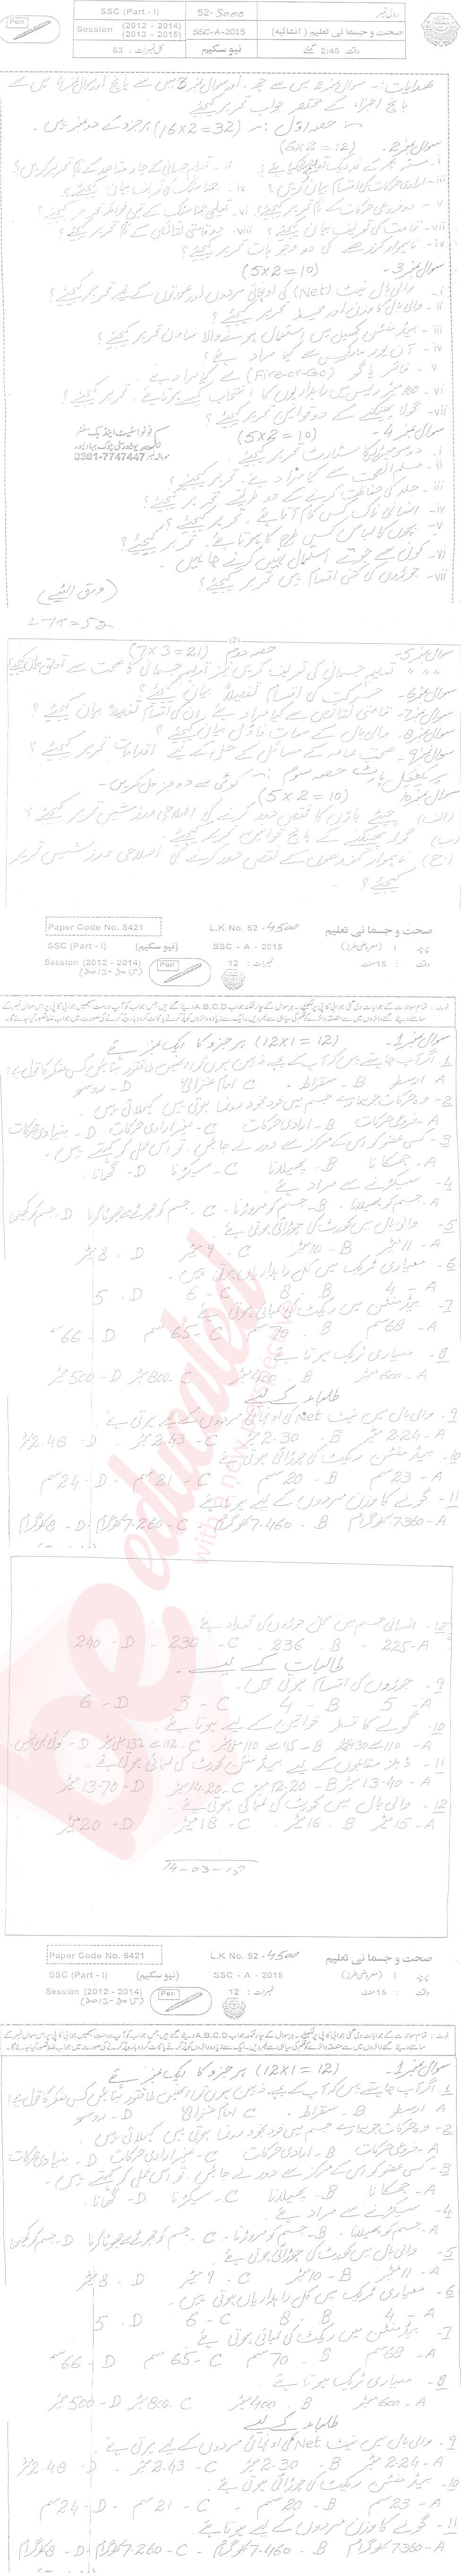 Health and Physical Education 9th Urdu Medium Past Paper Group 1 BISE Bahawalpur 2015